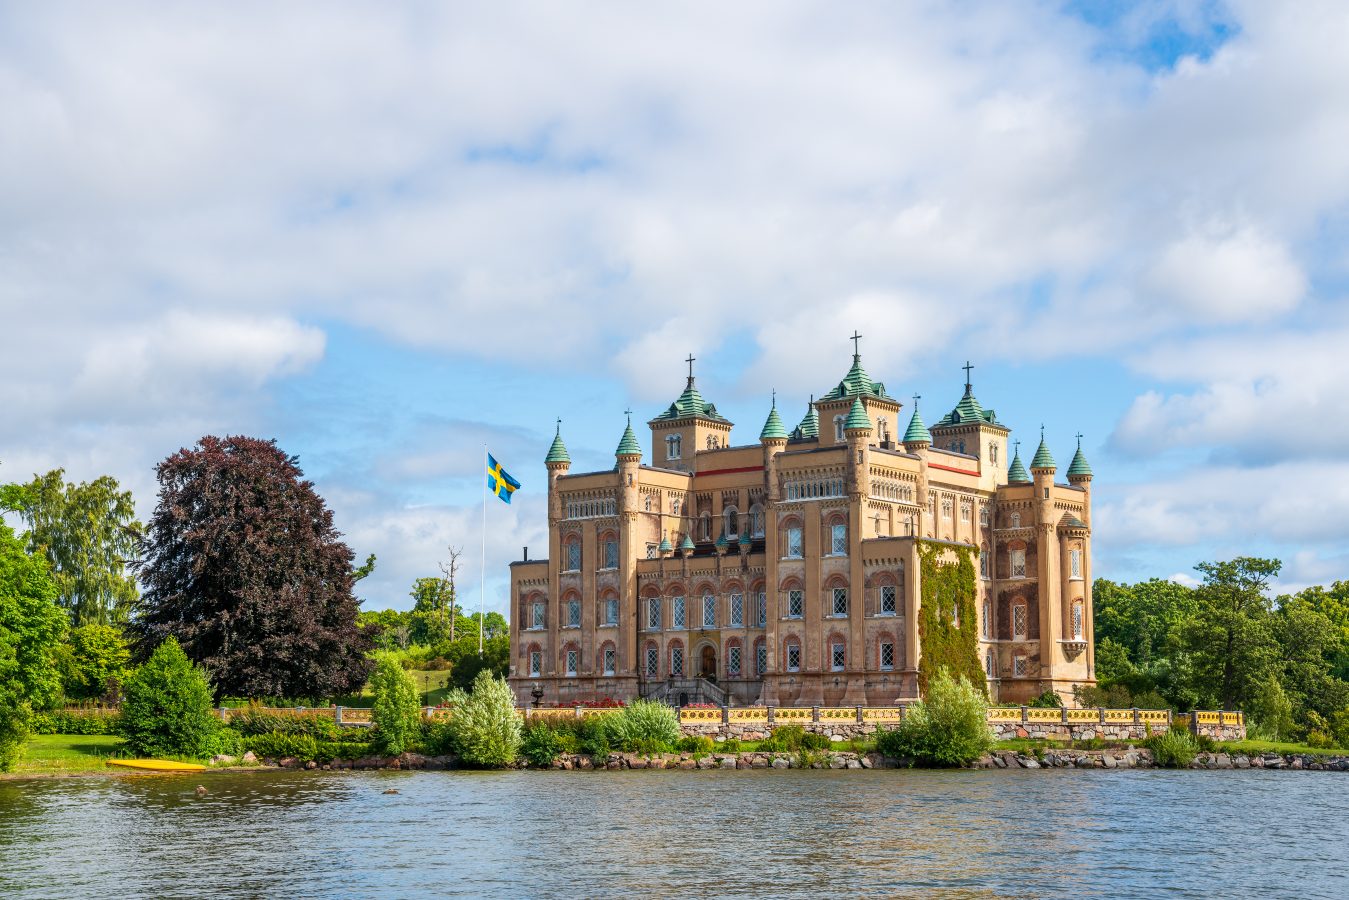 Stora Sundby Castle near Eskilstuna, Sweden